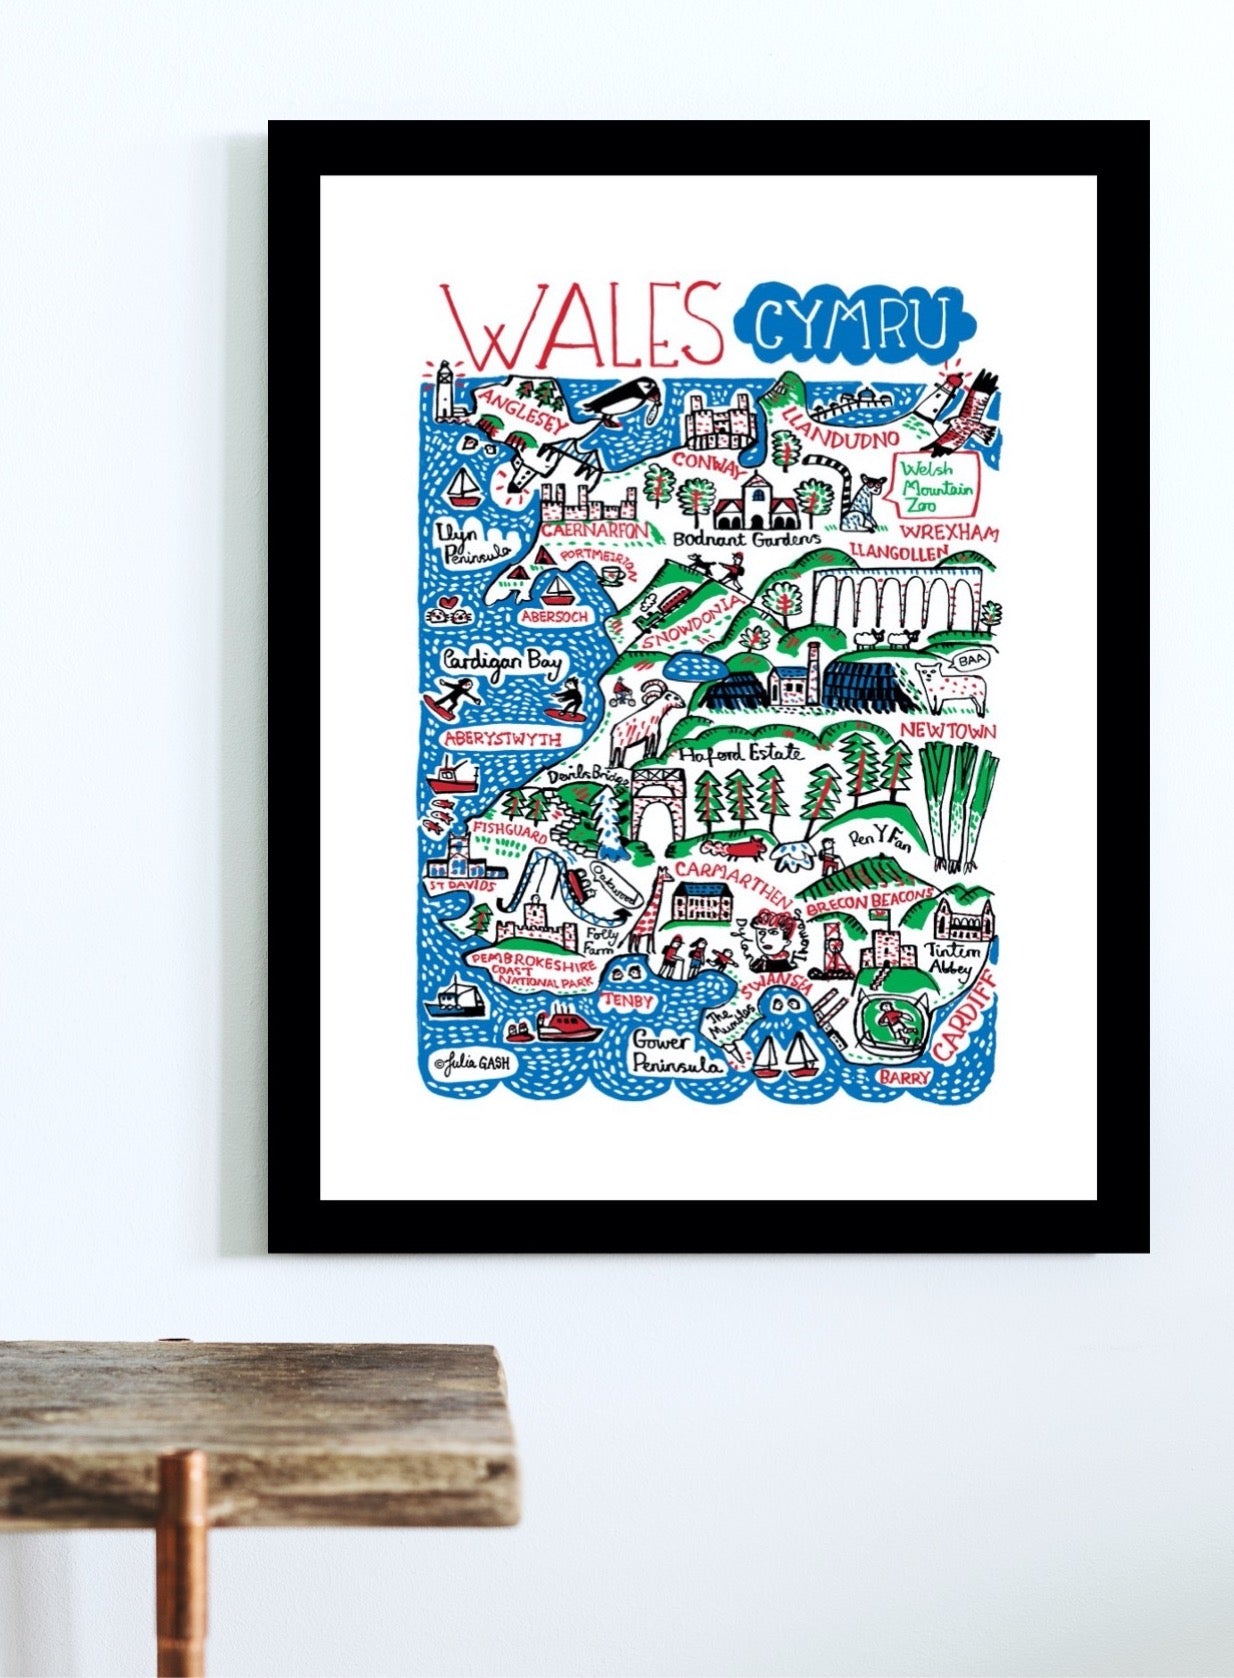 Wales - Cymru Map Illustration Art Print featuring Cardiff, Brecon Beacons, Snowdonia by Julia Gash